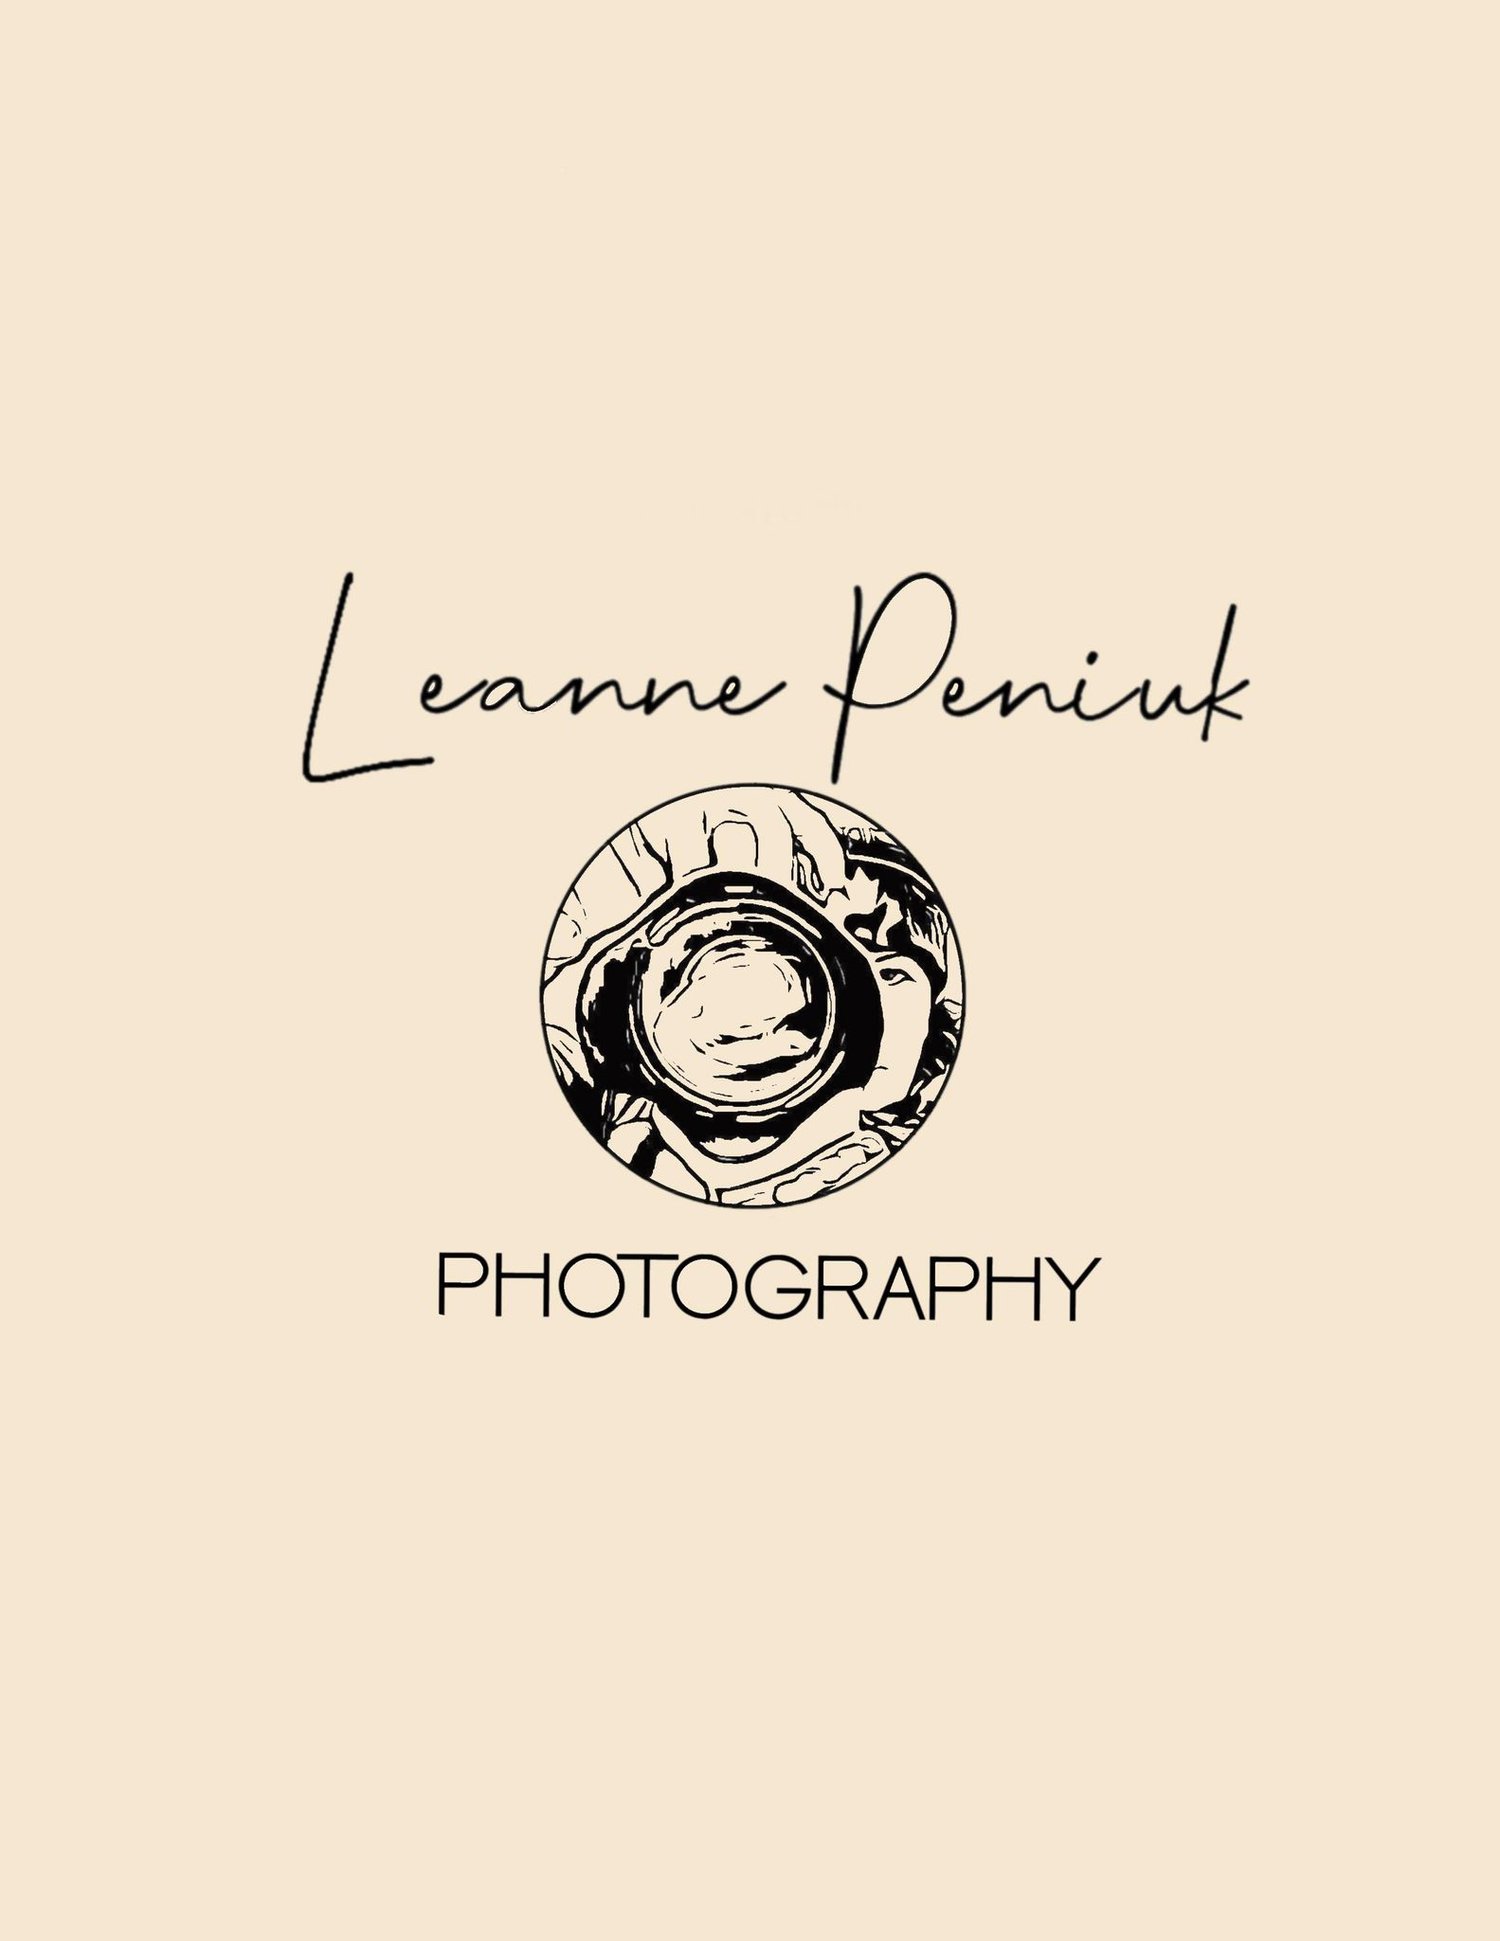 Leanne Peniuk Photography